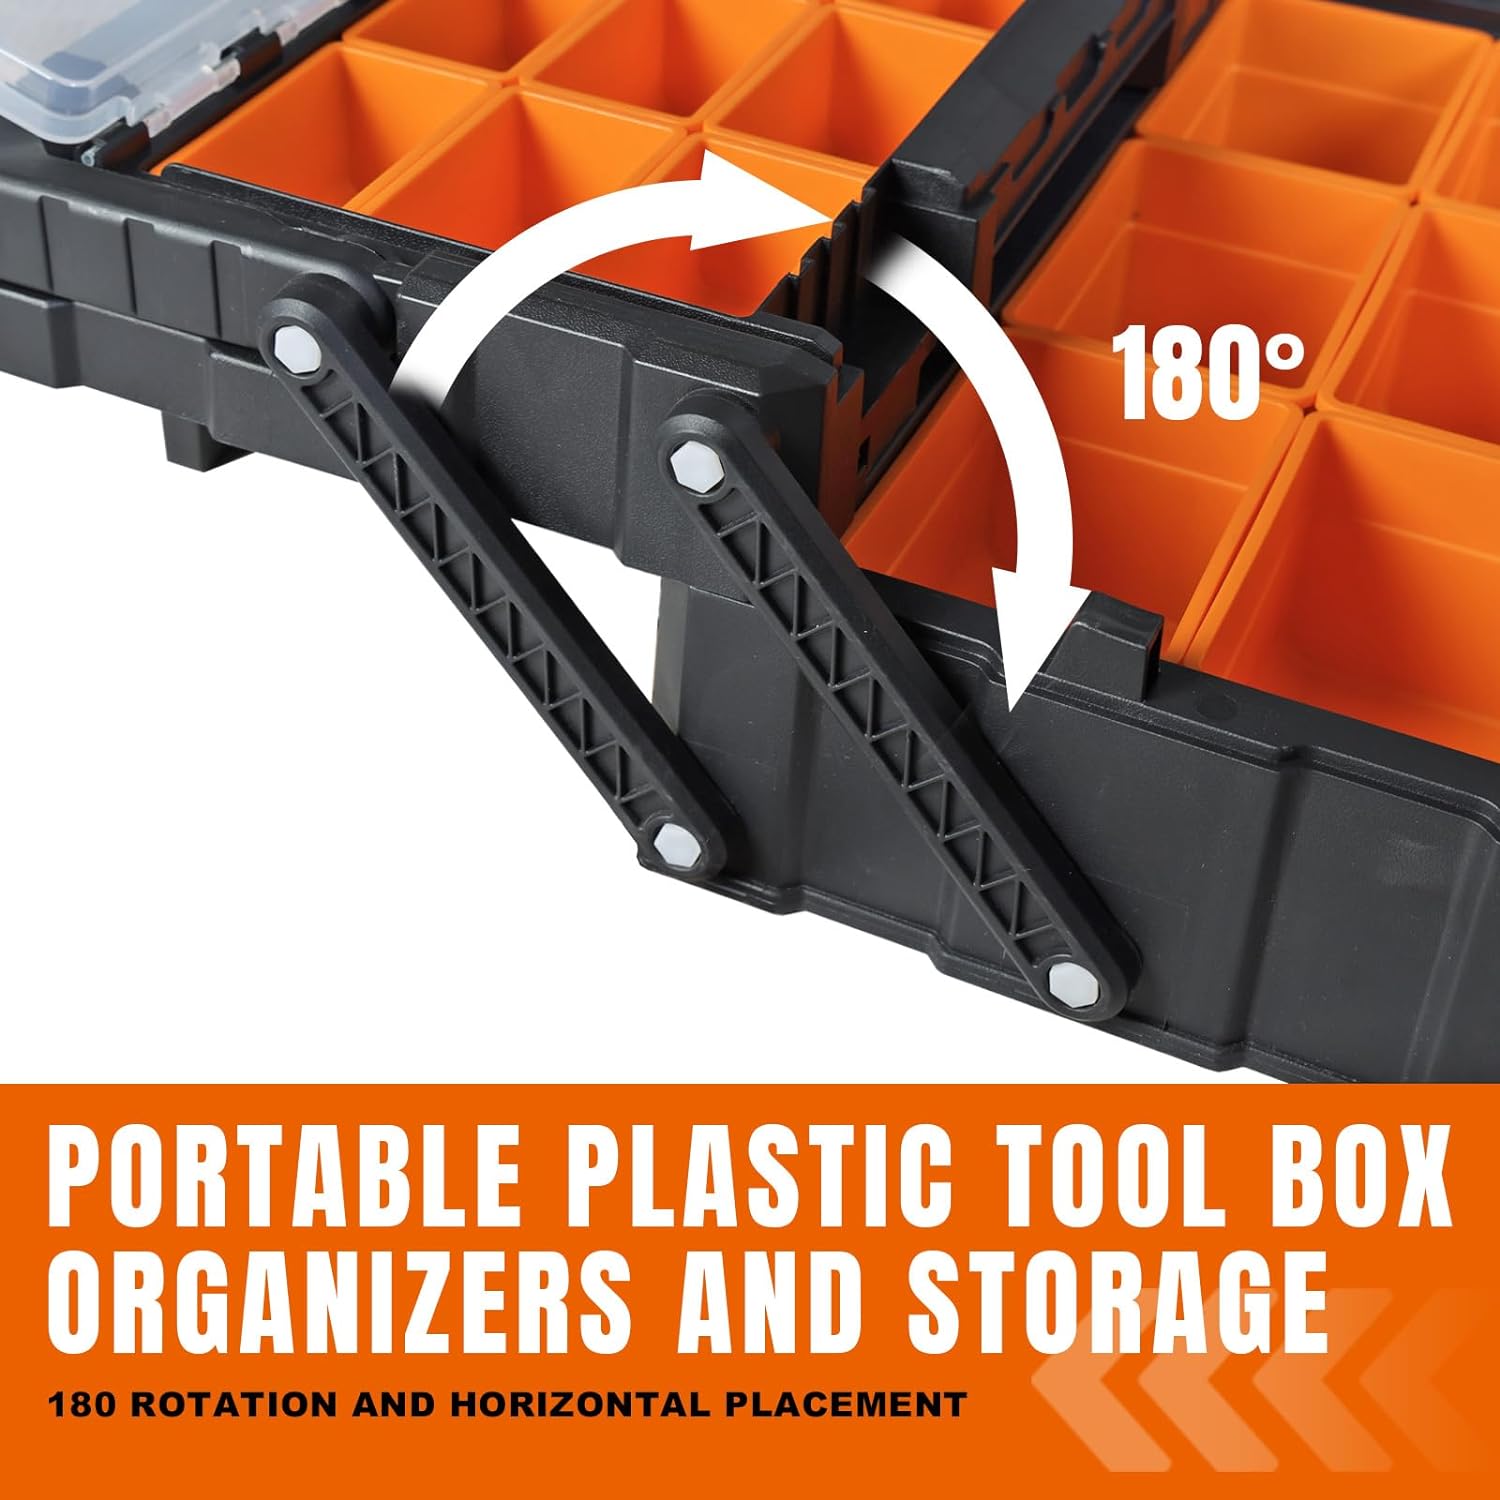 big-red-18-inch-foldable-tool-box